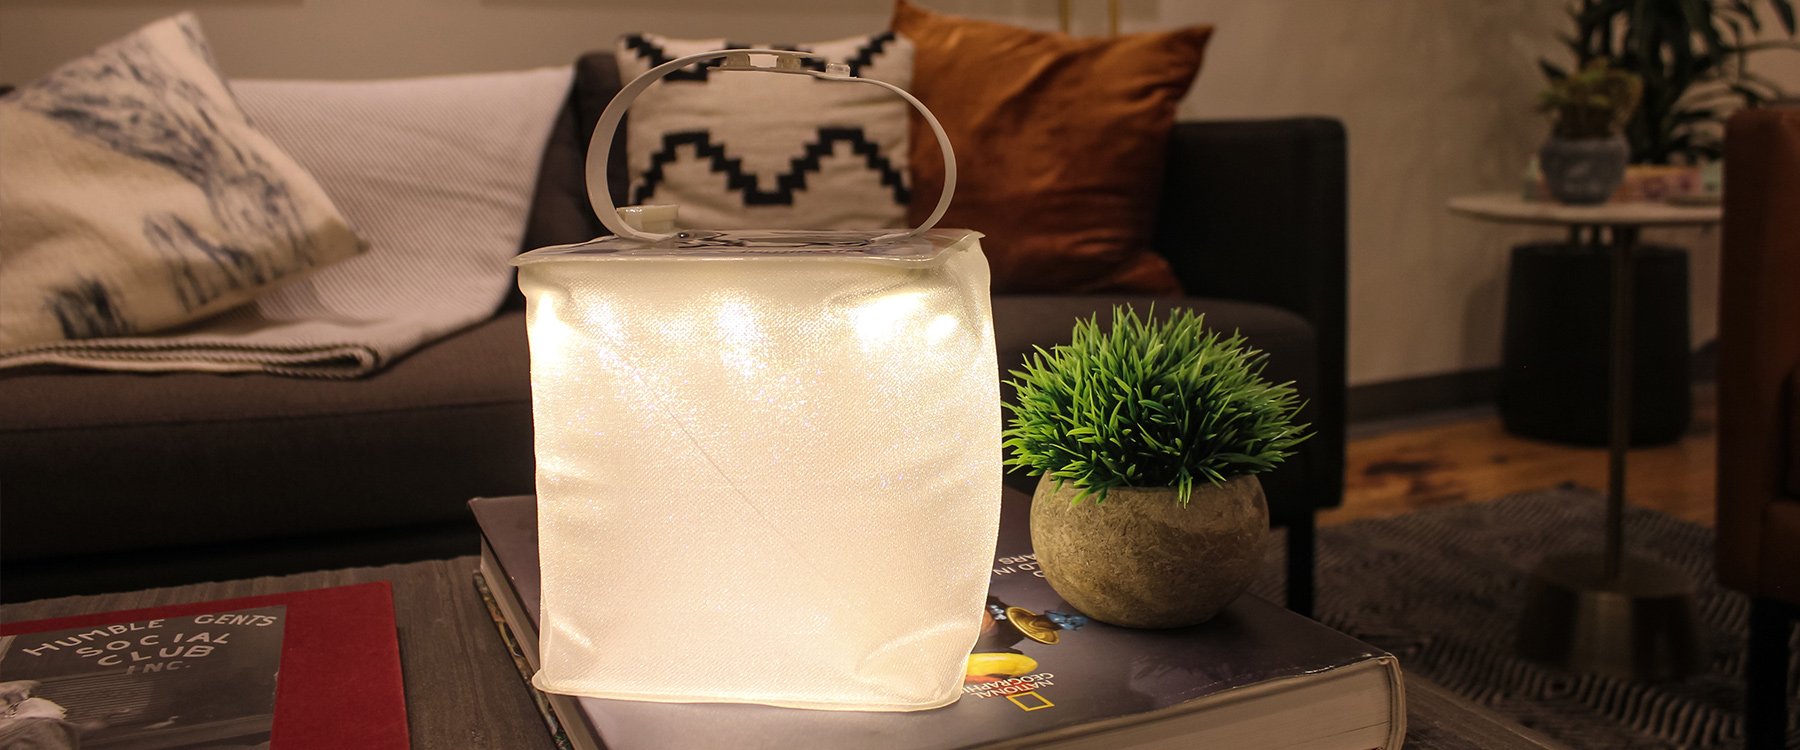 Cozy firefly lantern in living room.